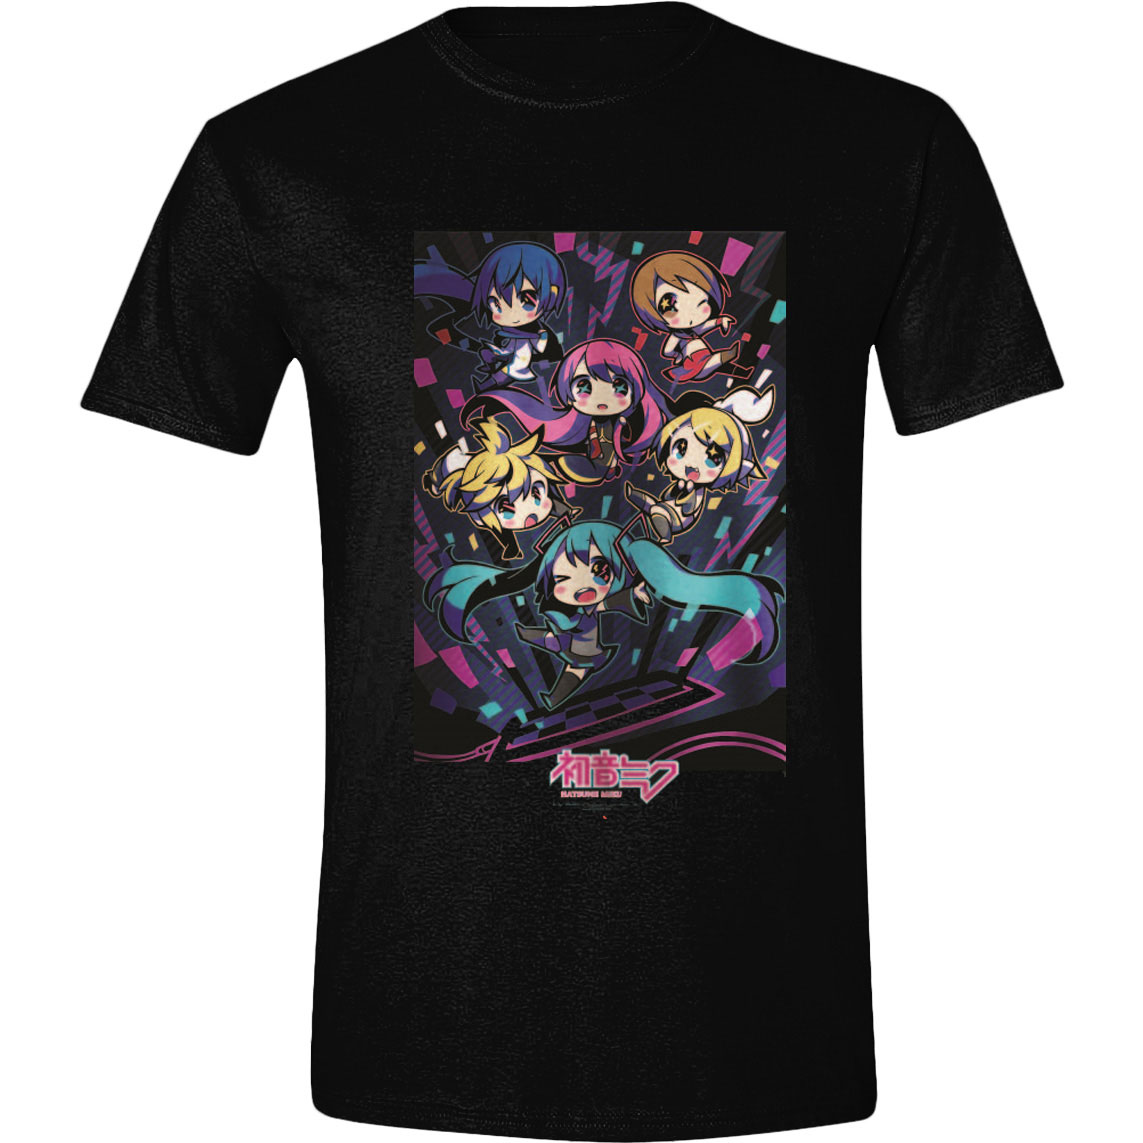 Miku Hatsune t-shirt - Kawaii gang